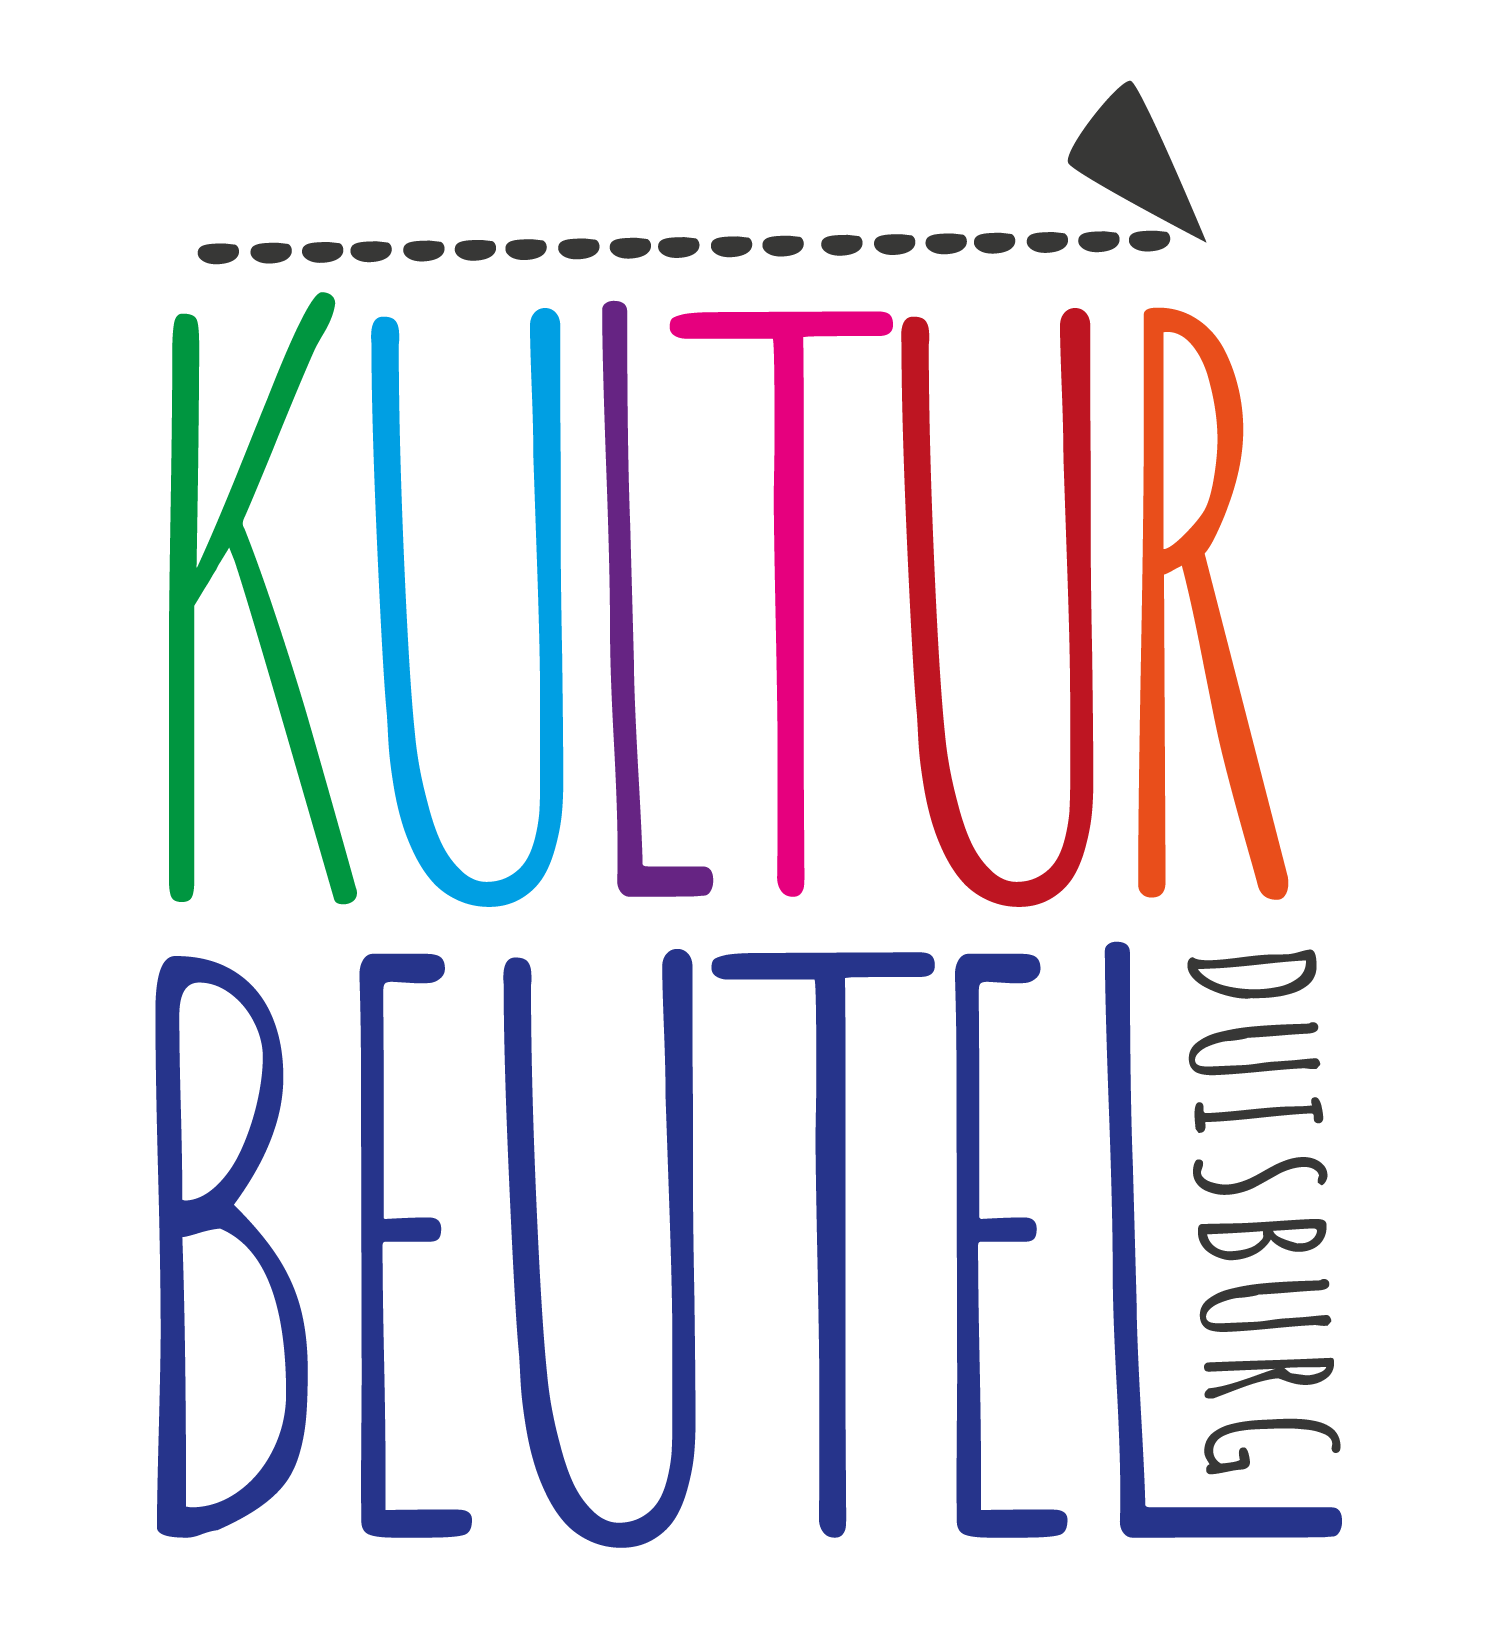 Kulturbeutel Duisburg